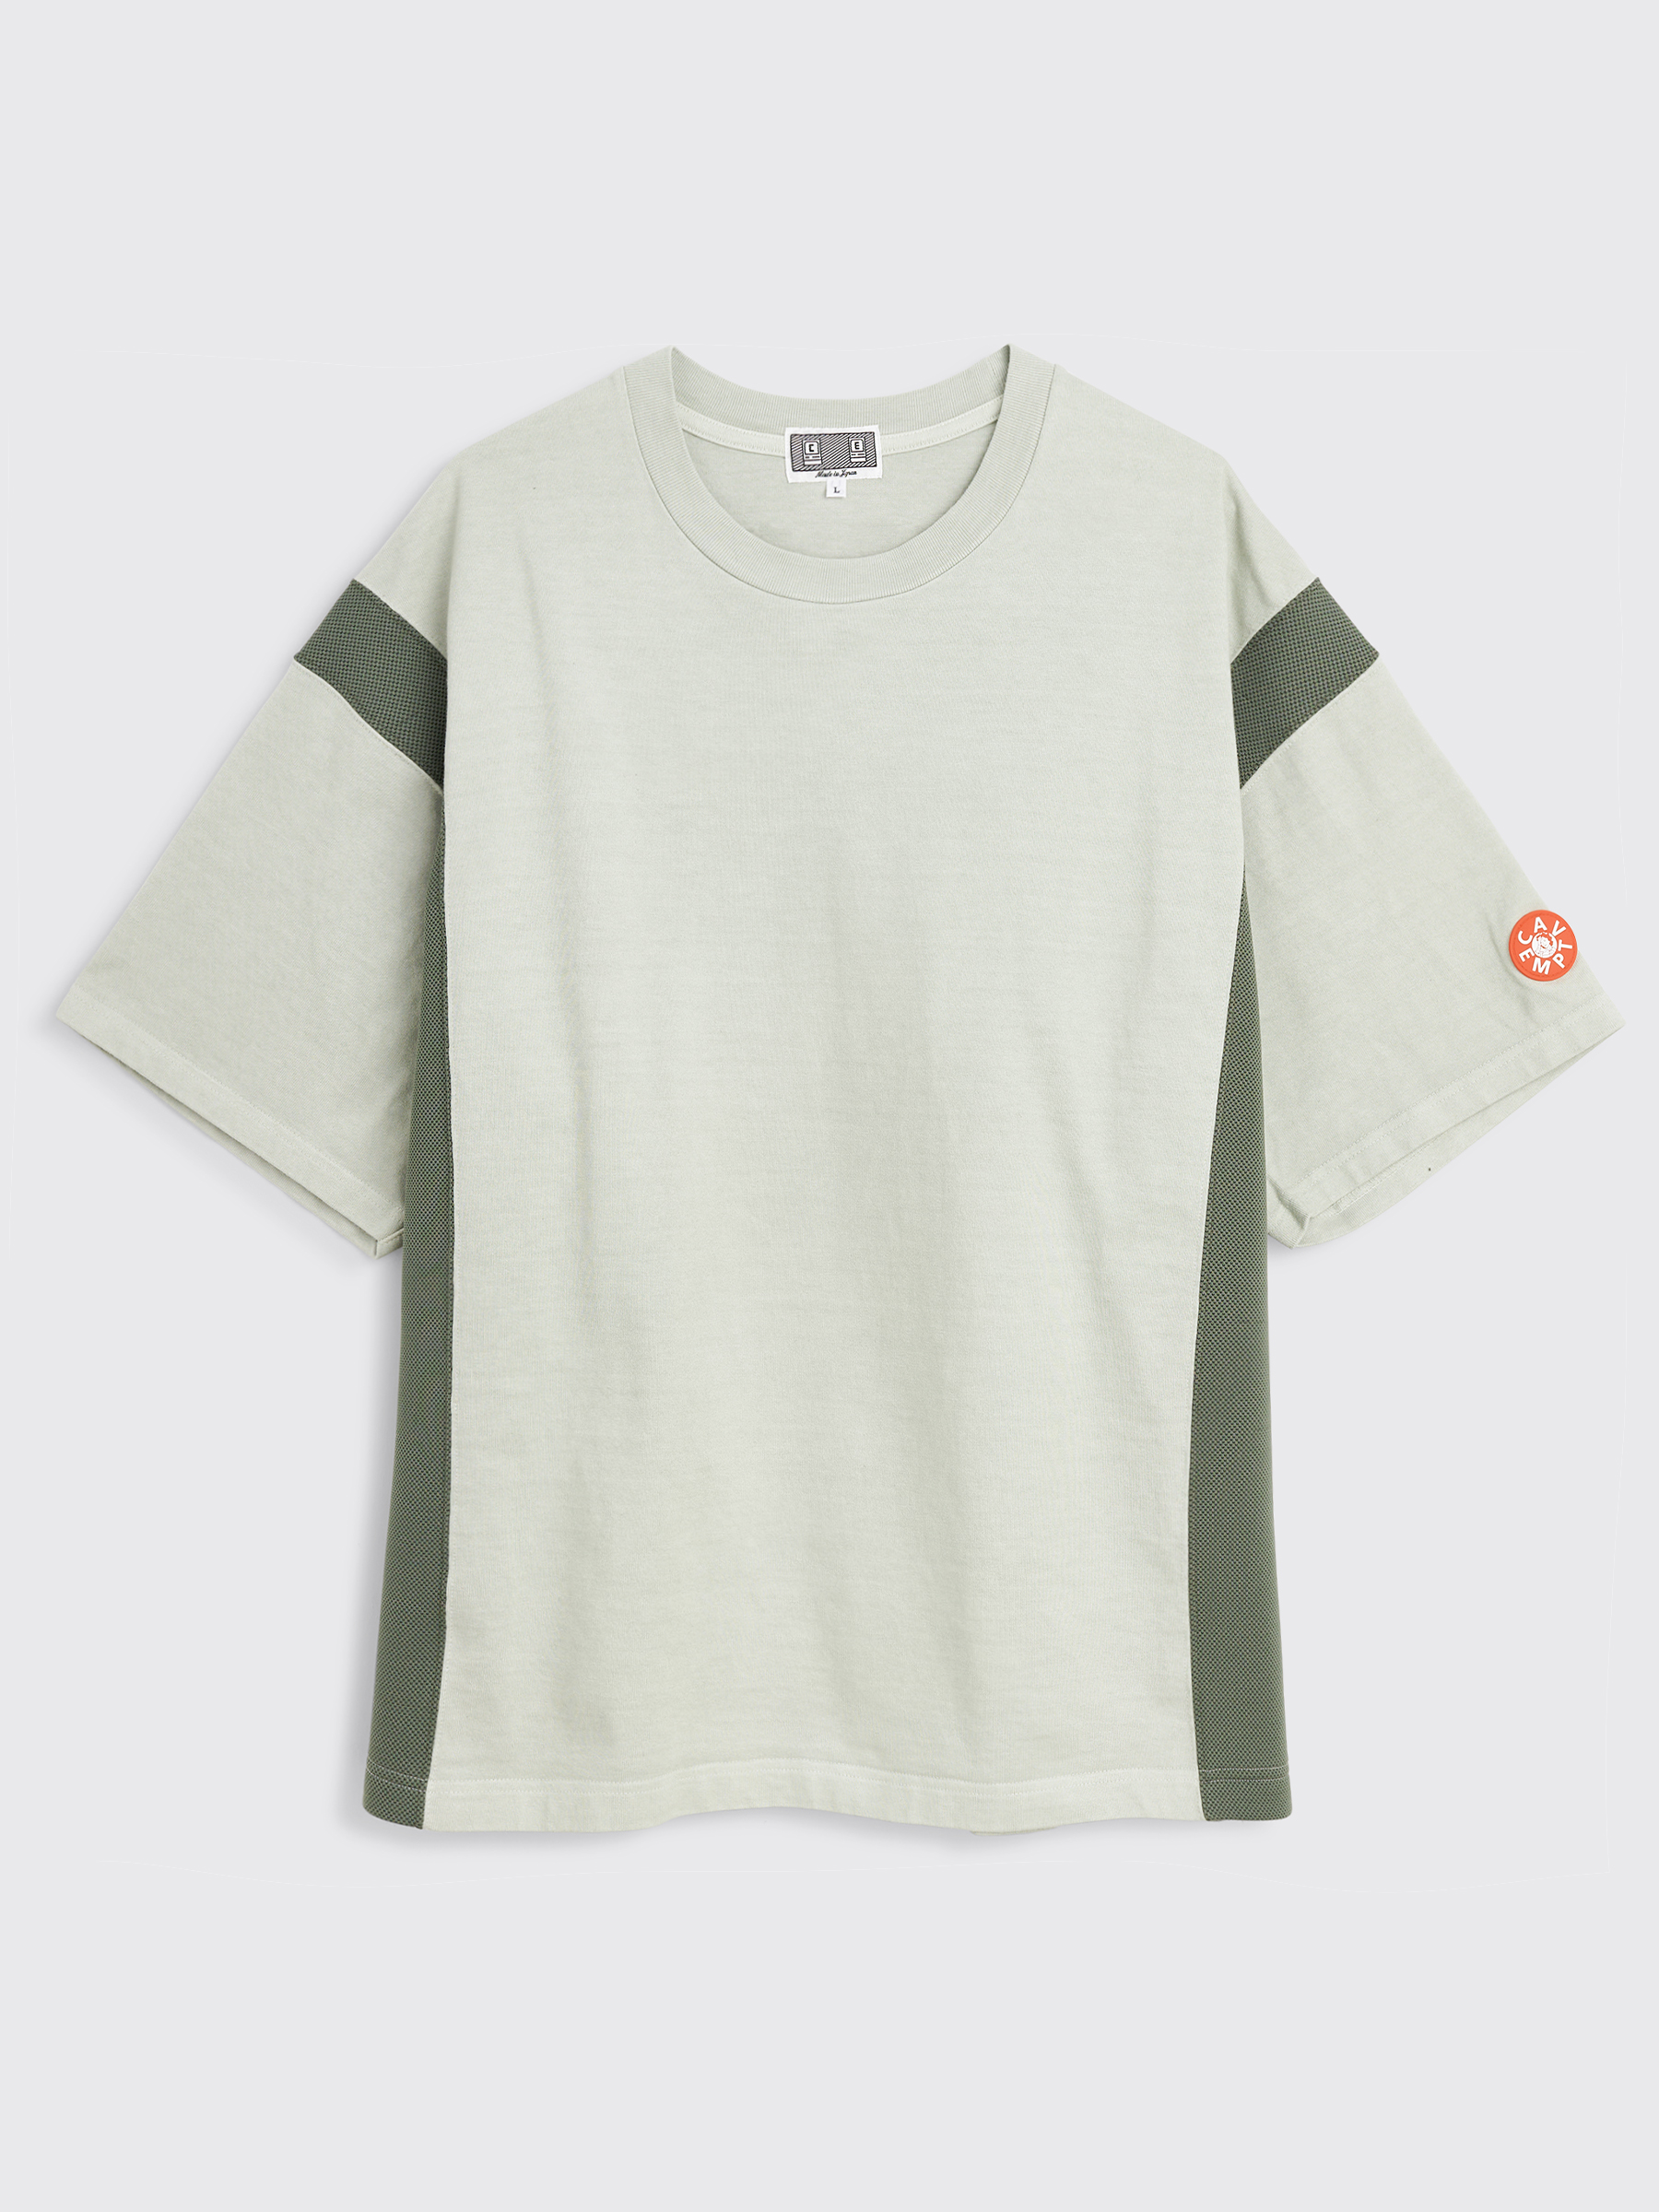 Bien Big Knit - T-shirt Grey Overdye D Side Empt Cav Très